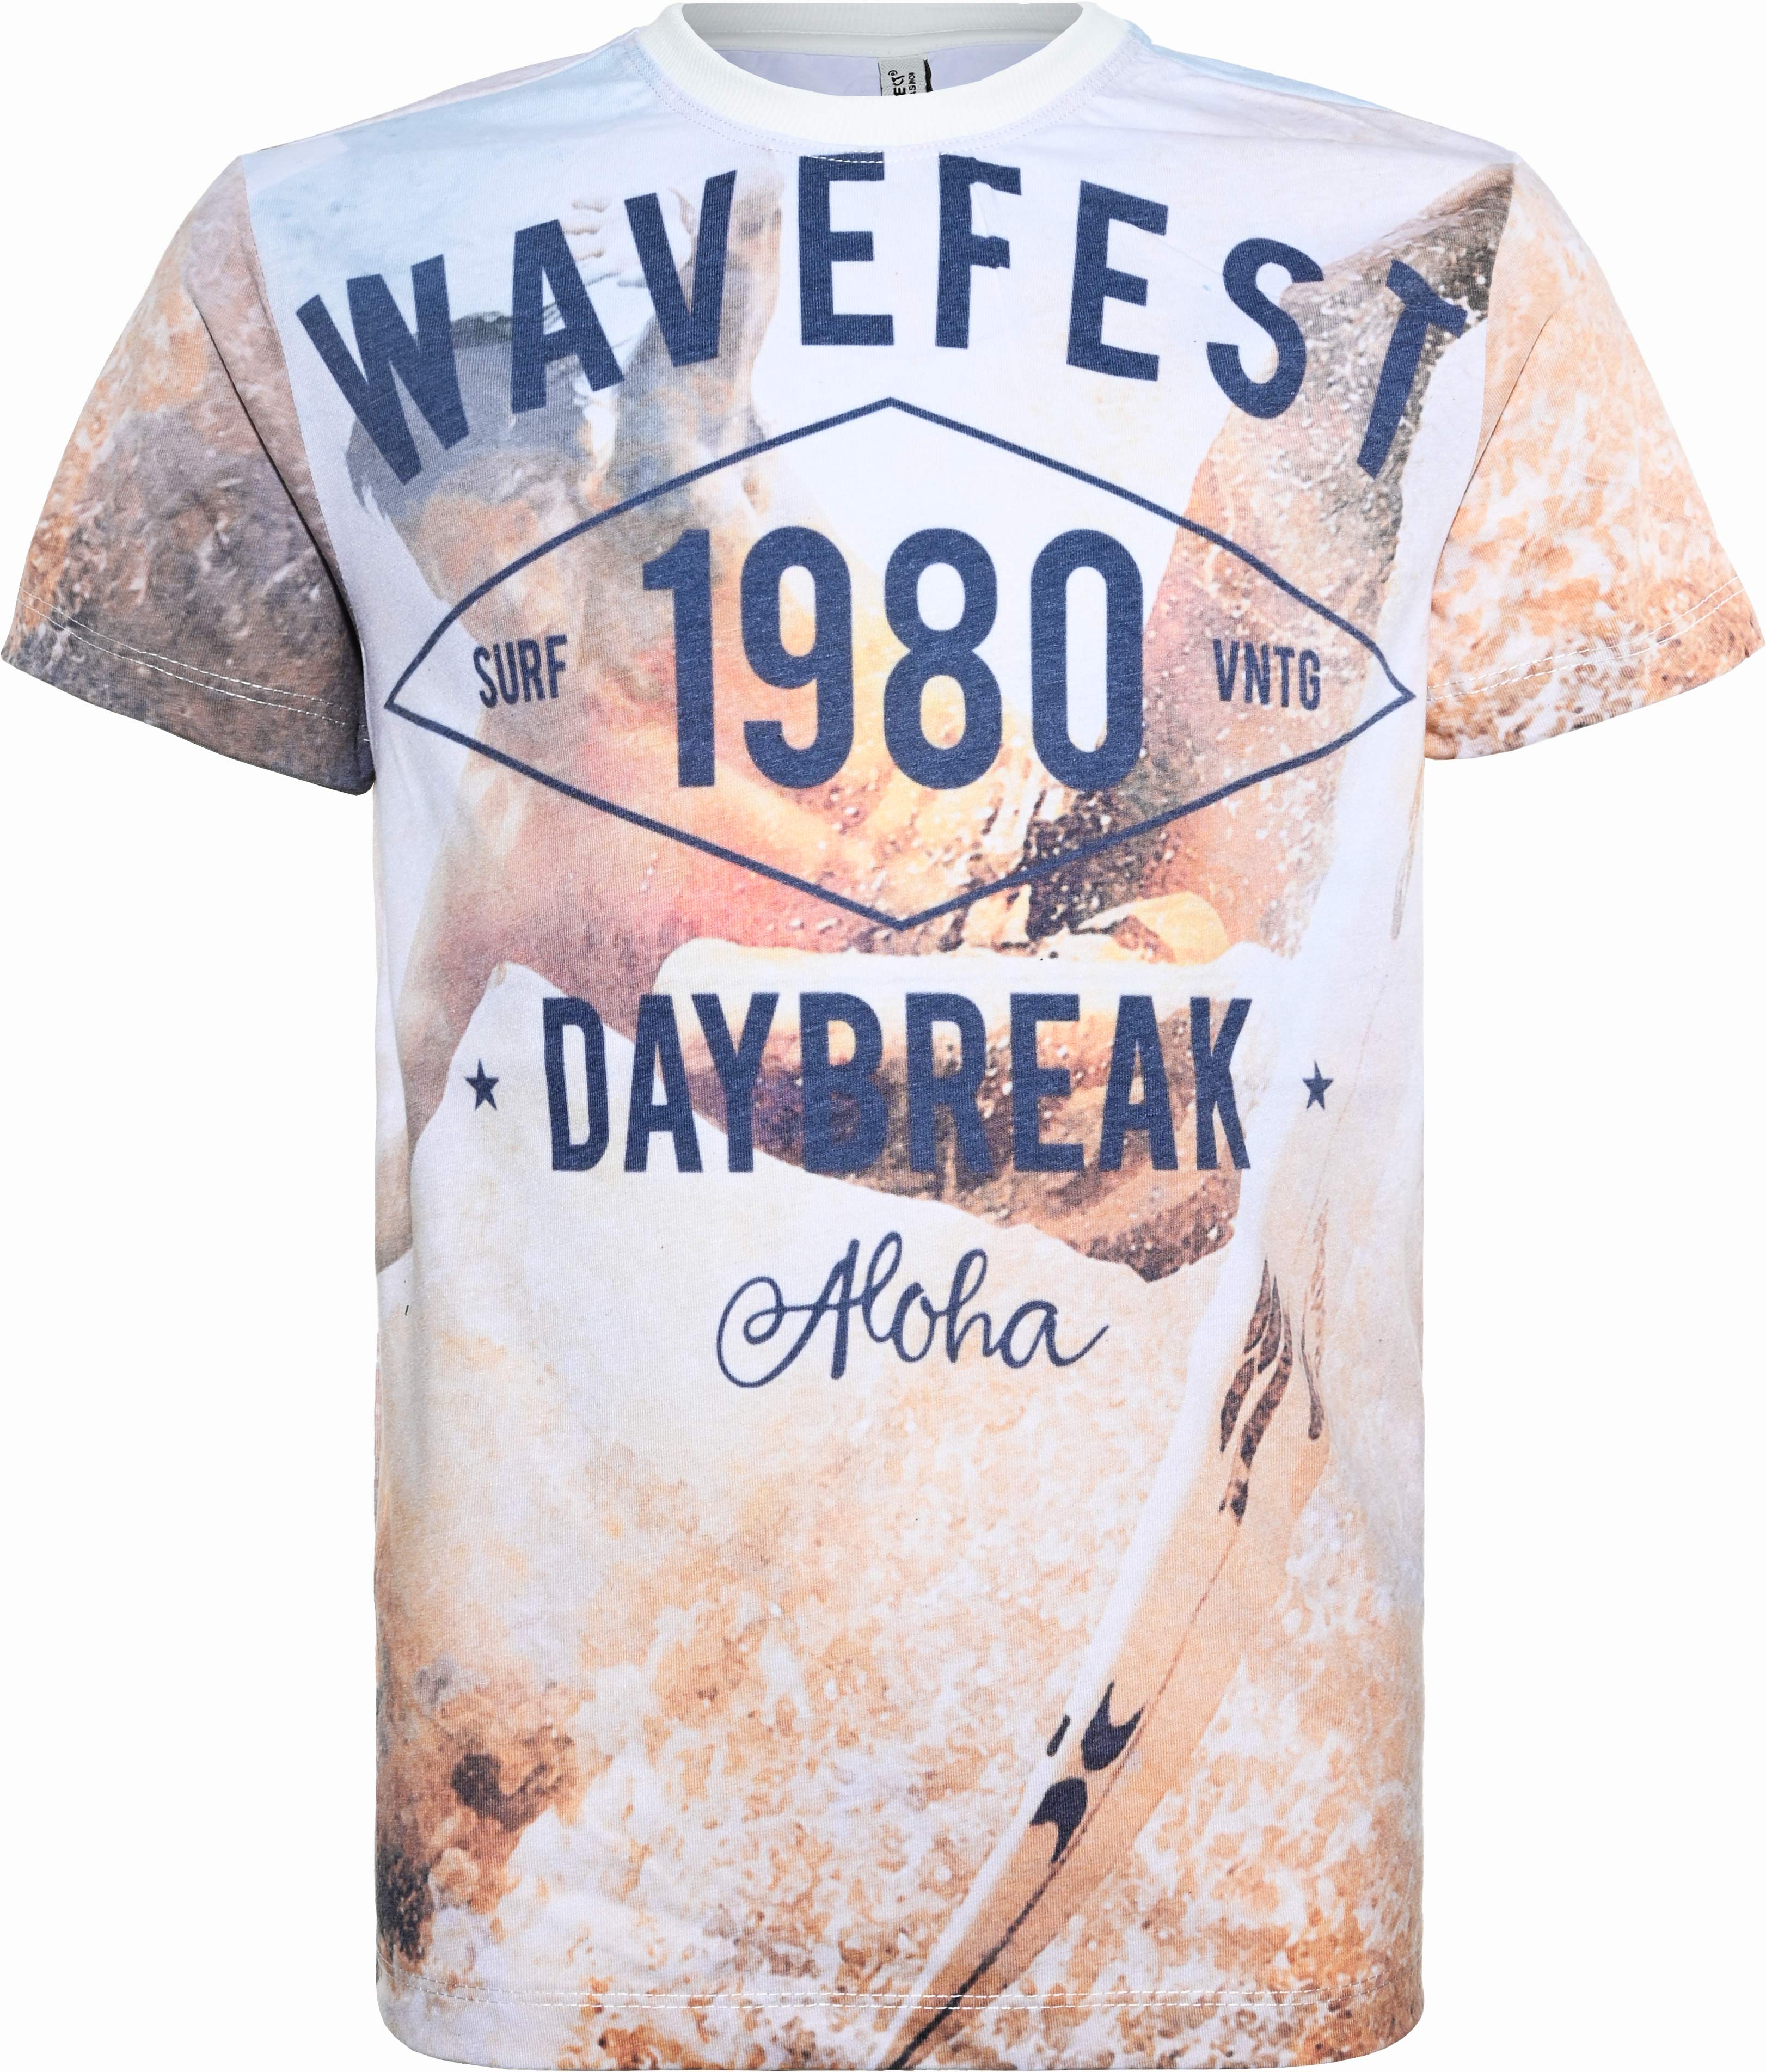 6356-Boys T-Shirt -Wavefest